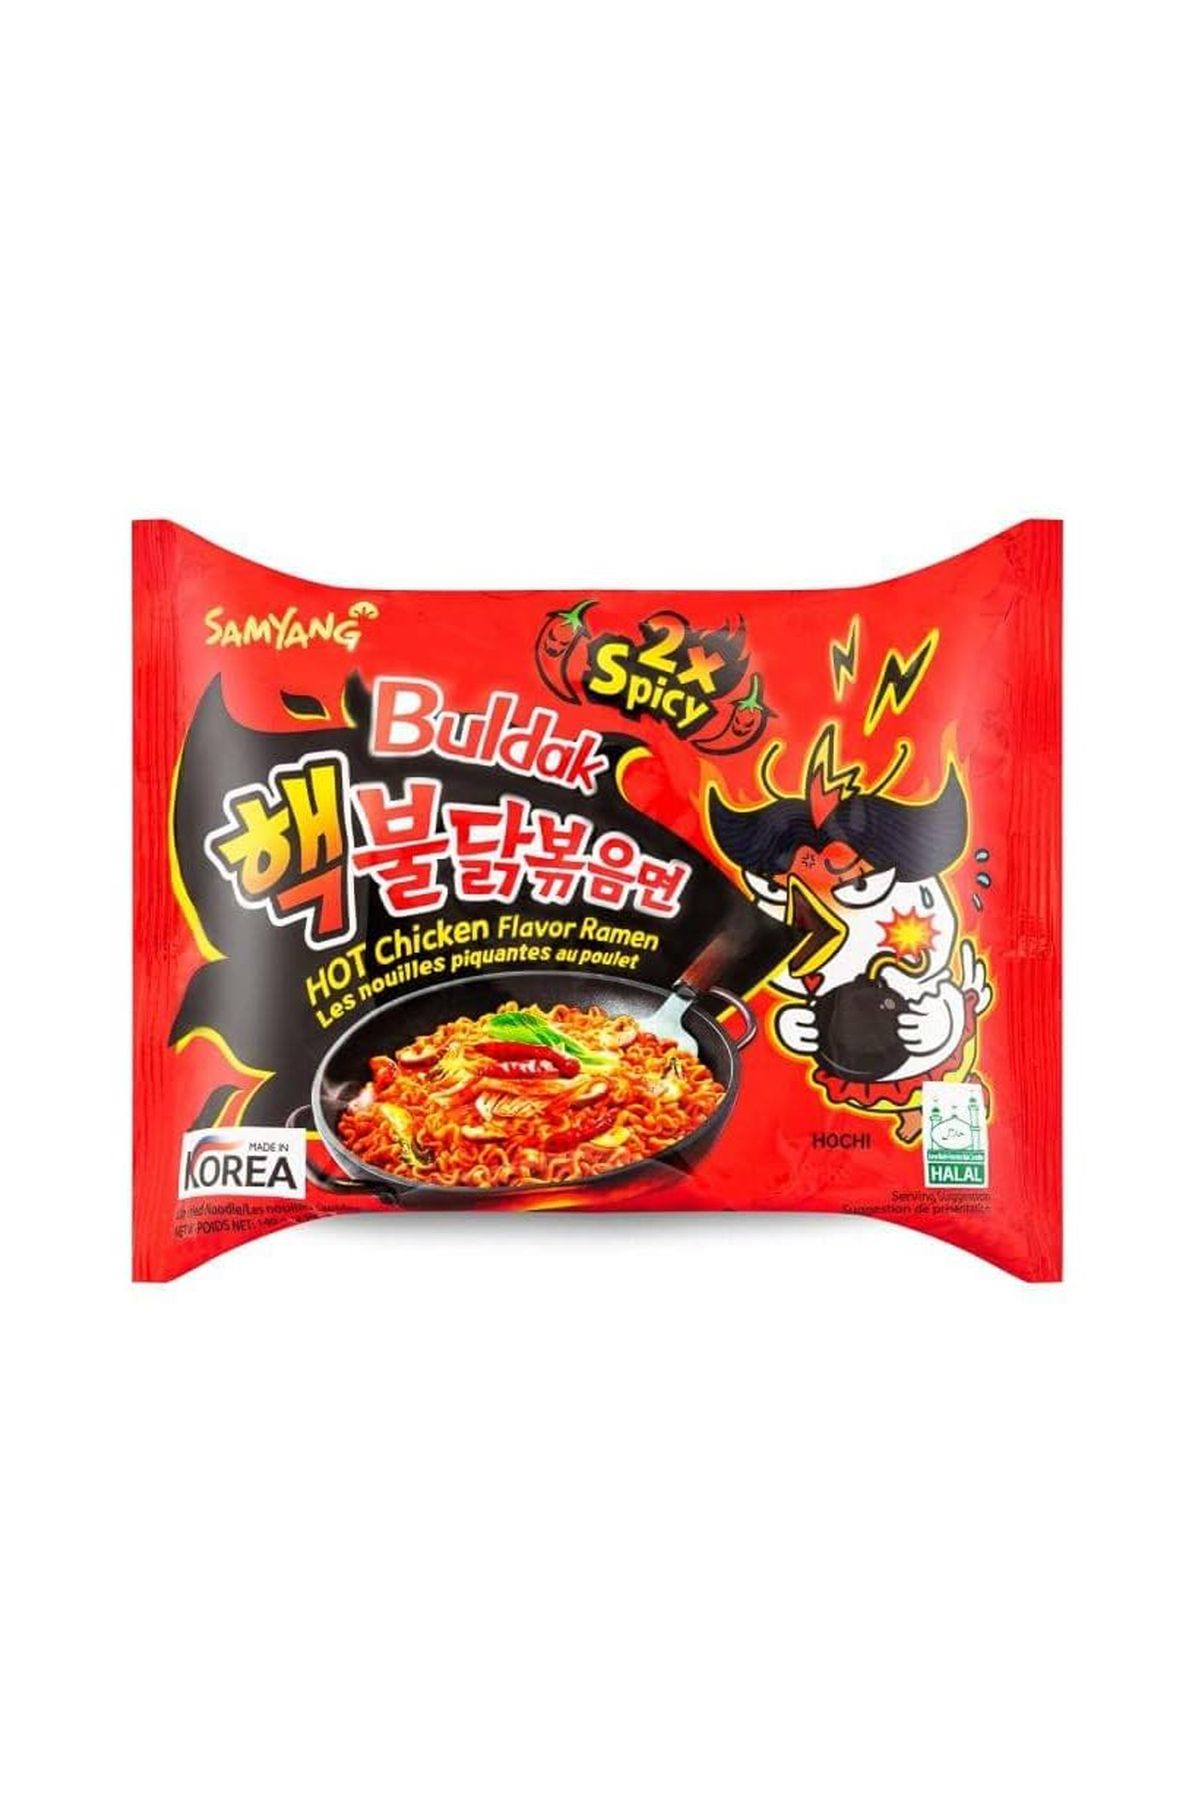 samyang Buldak 2x Spicy Noodle